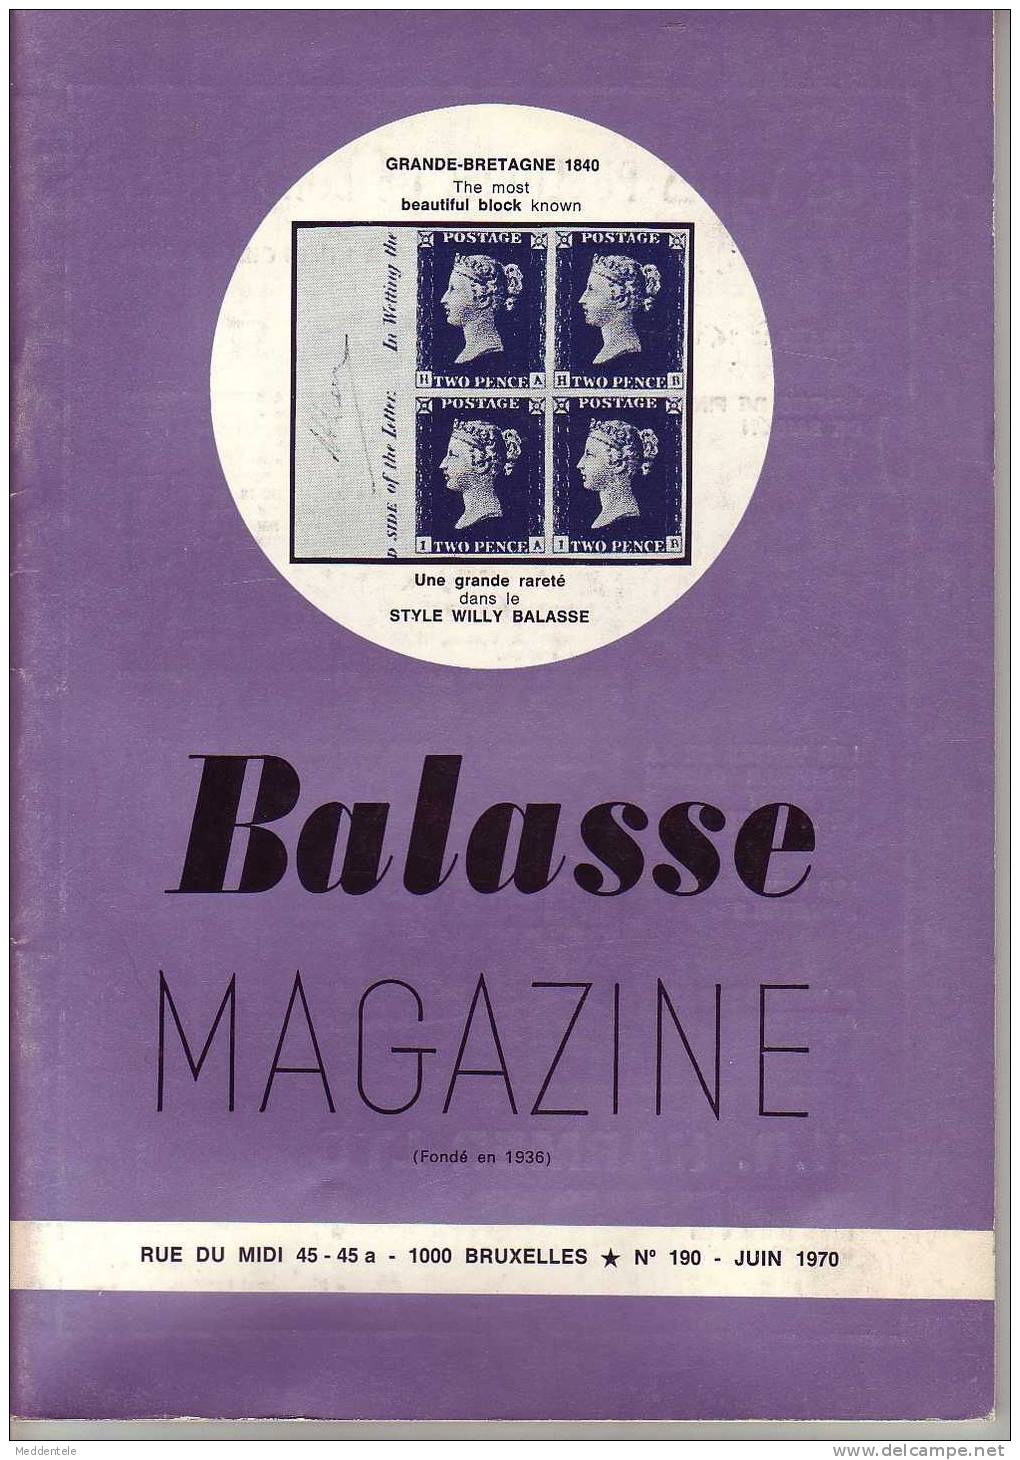 BALASSE MAGAZINE N° 190 - French (from 1941)